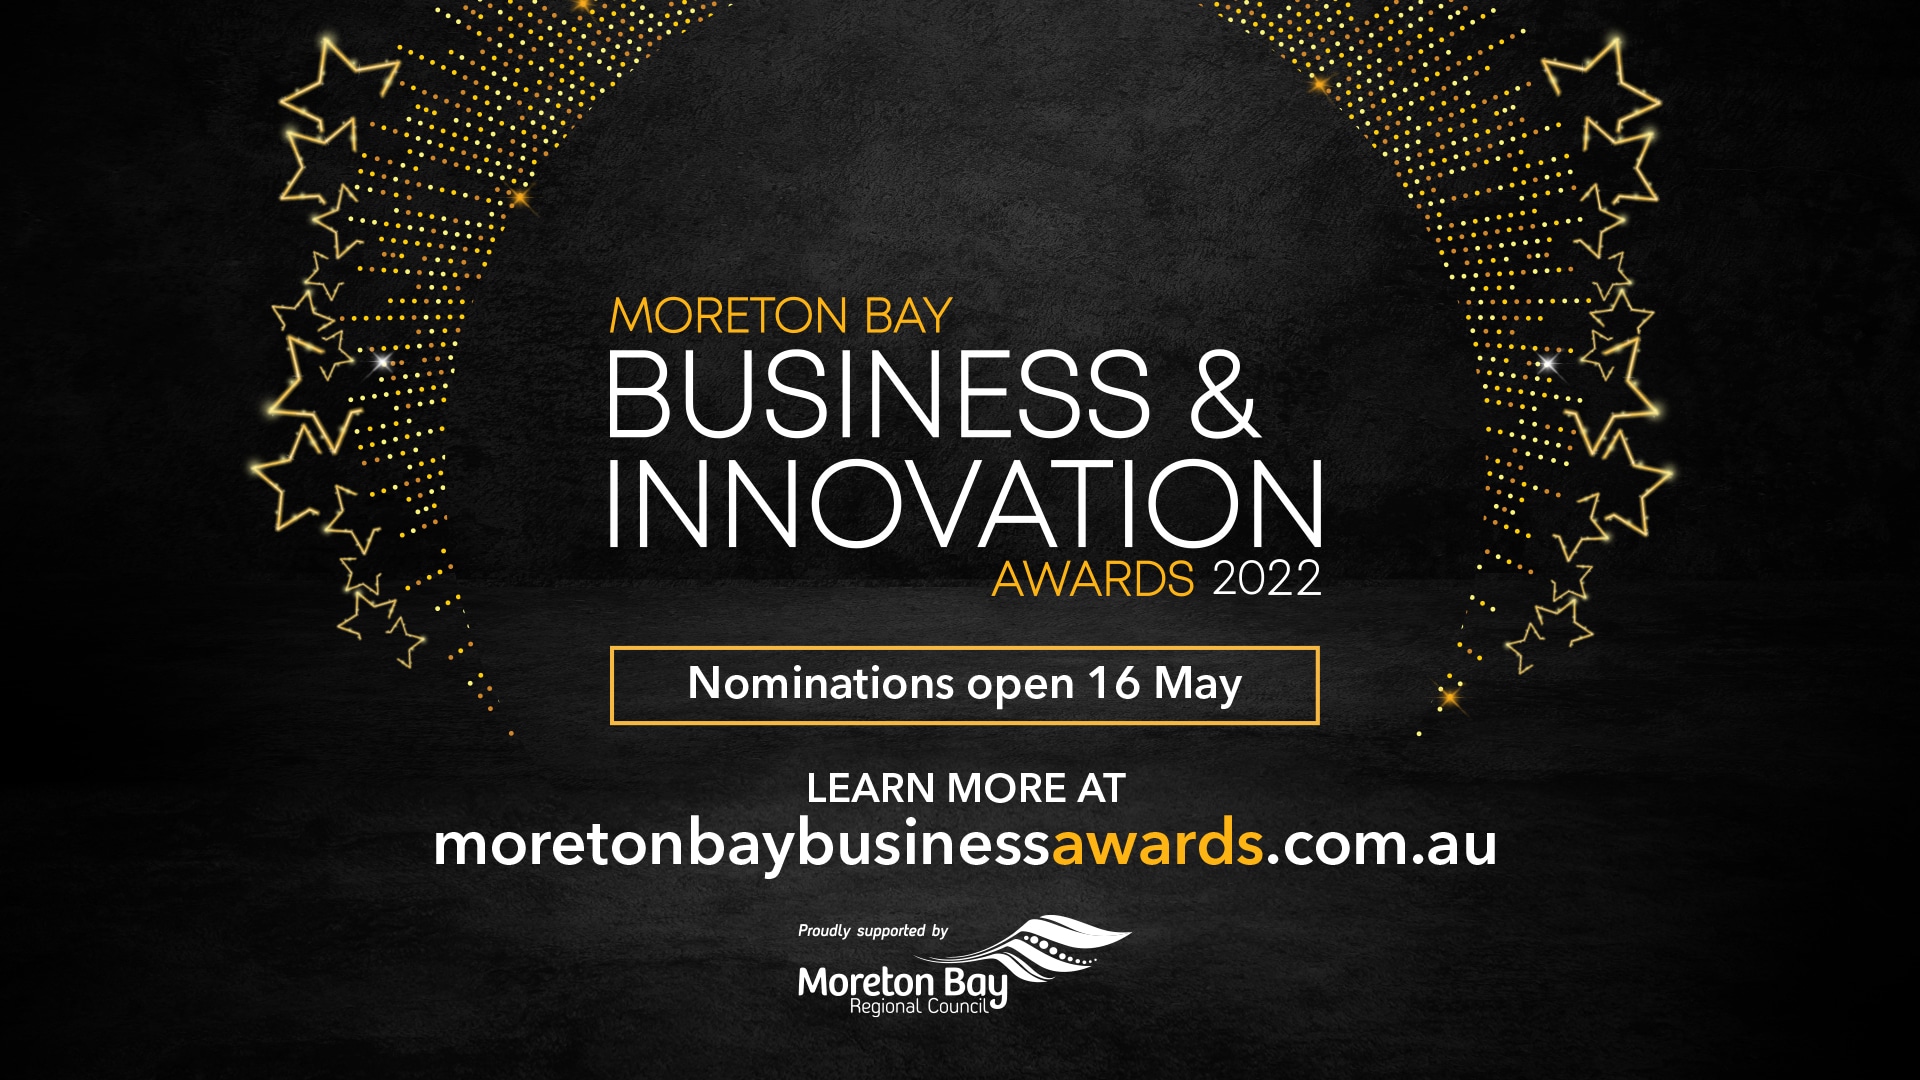 The Moreton Bay Business & Innovation Awards